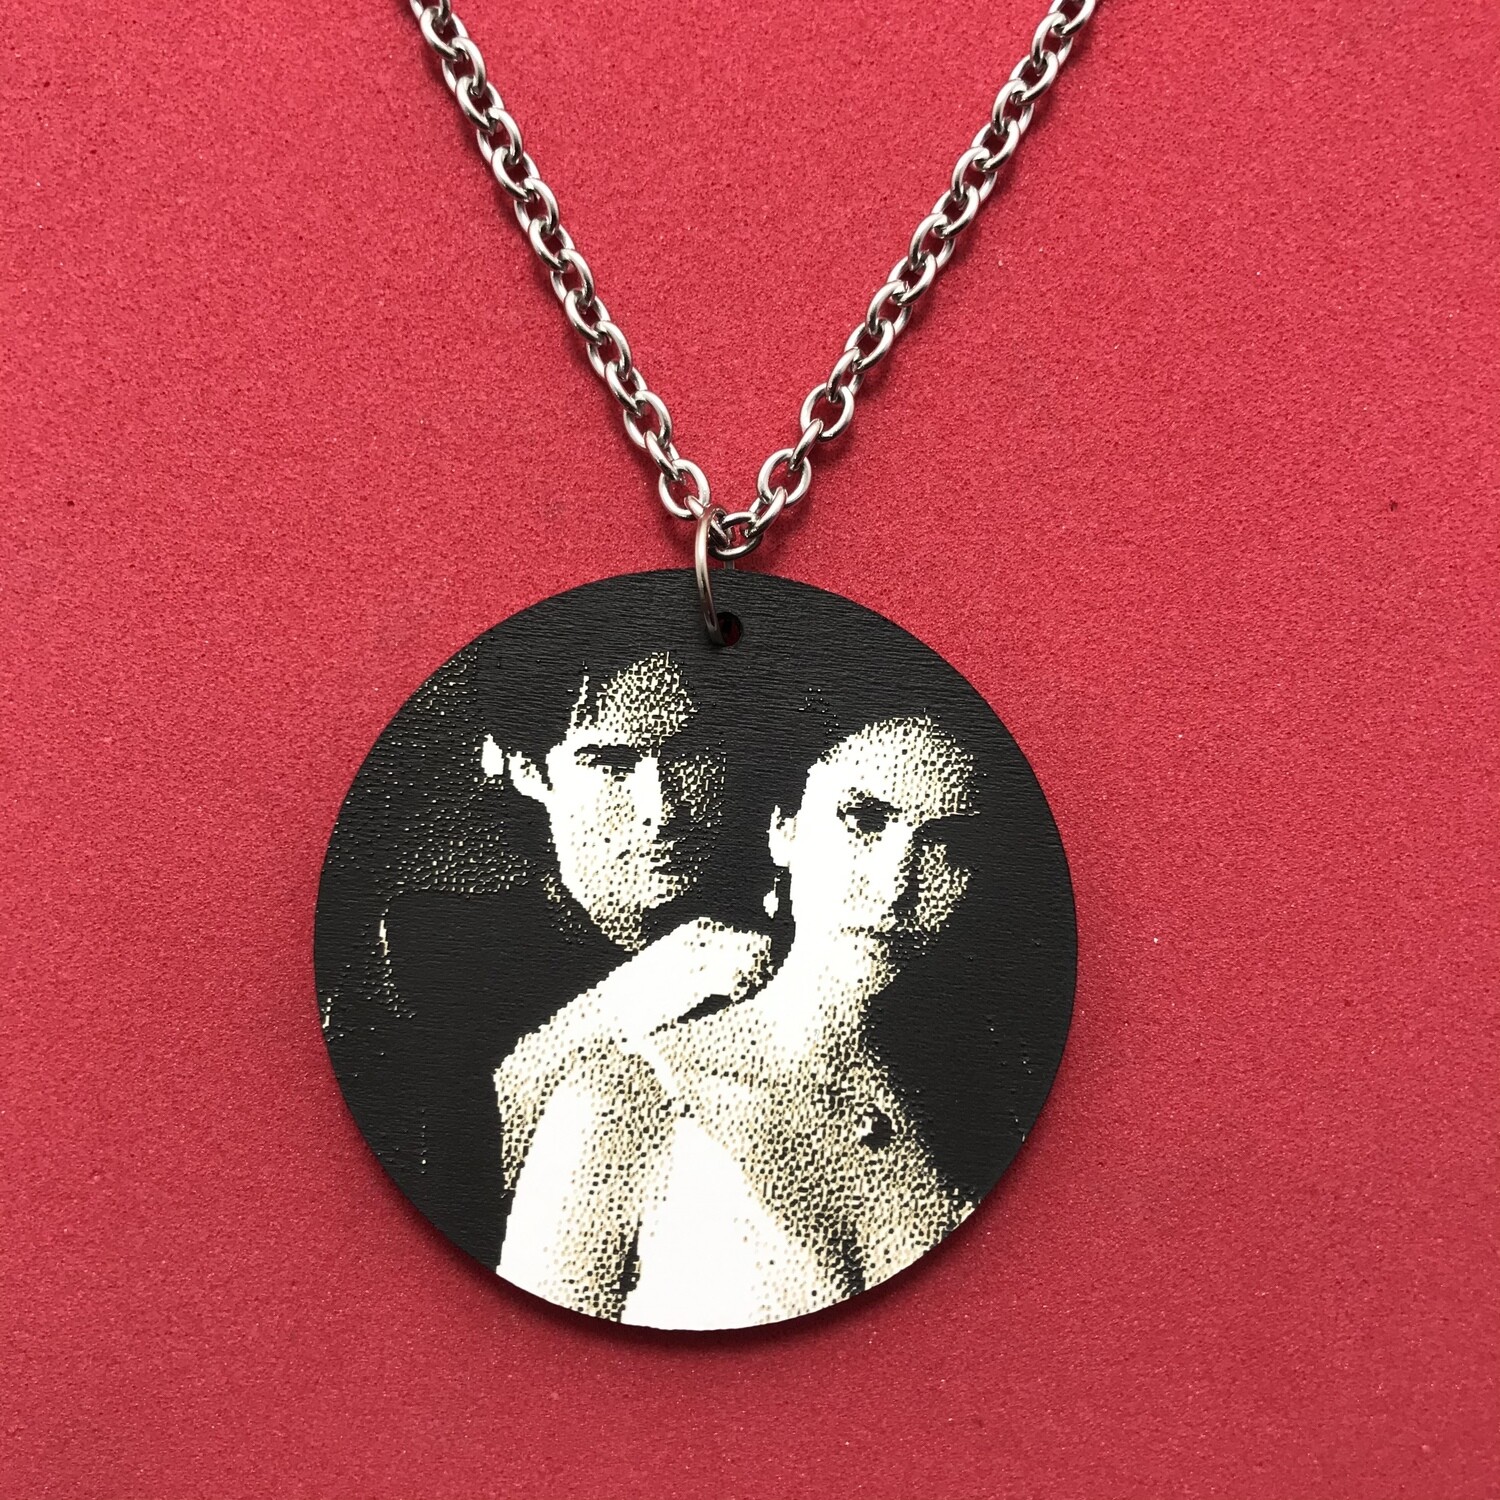 Delena (Elena and Damon) ogrlica